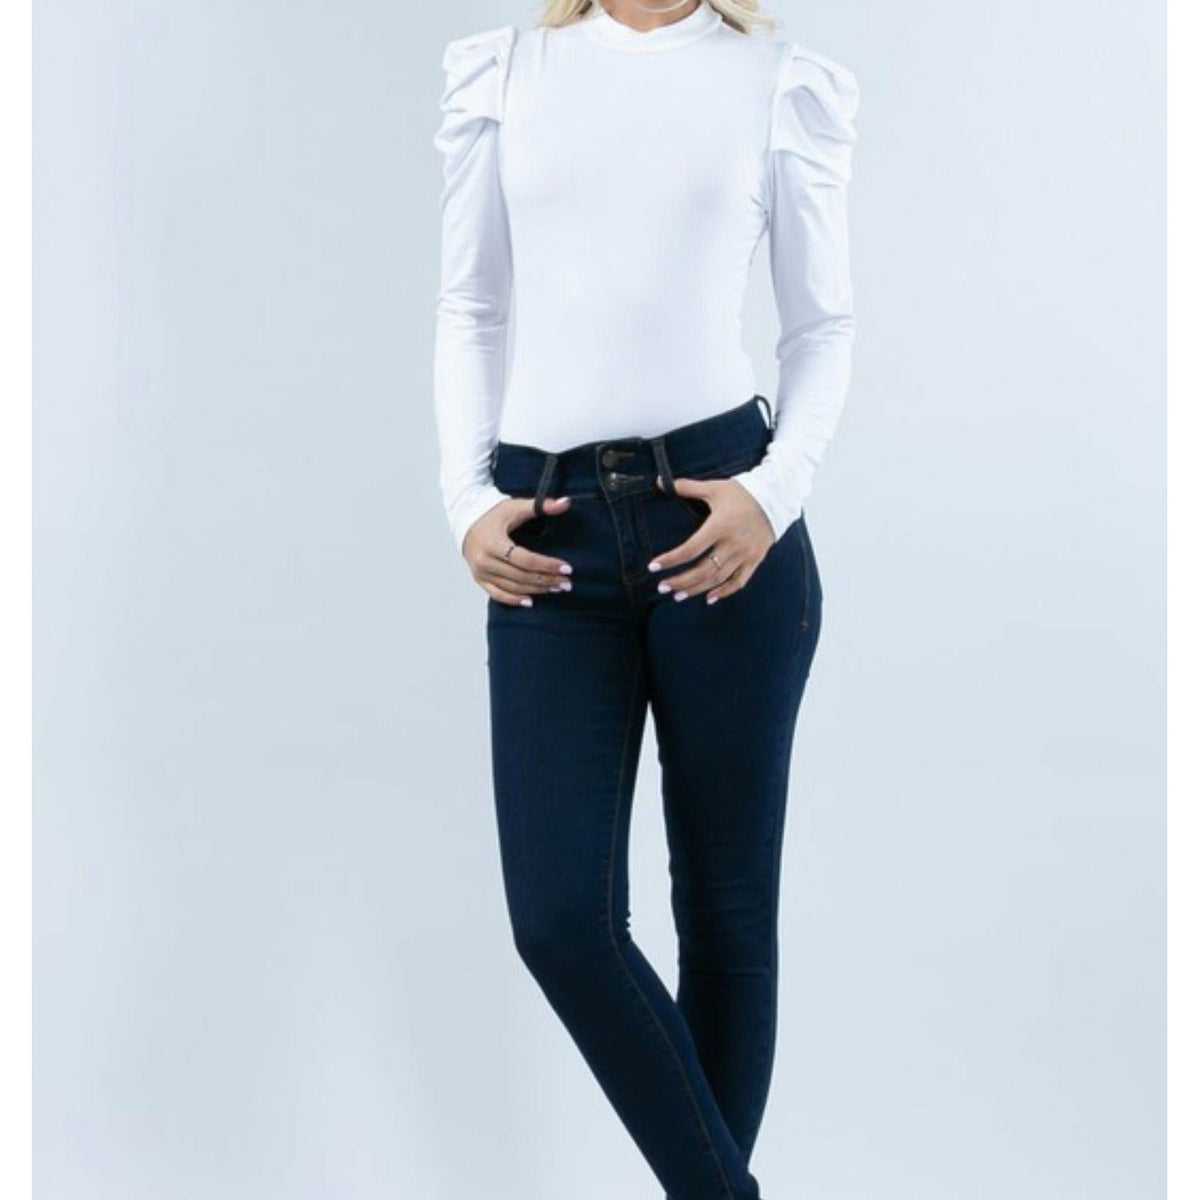 White Plus Size Bodysuit Size XL - Fabulously Dressed Boutique 